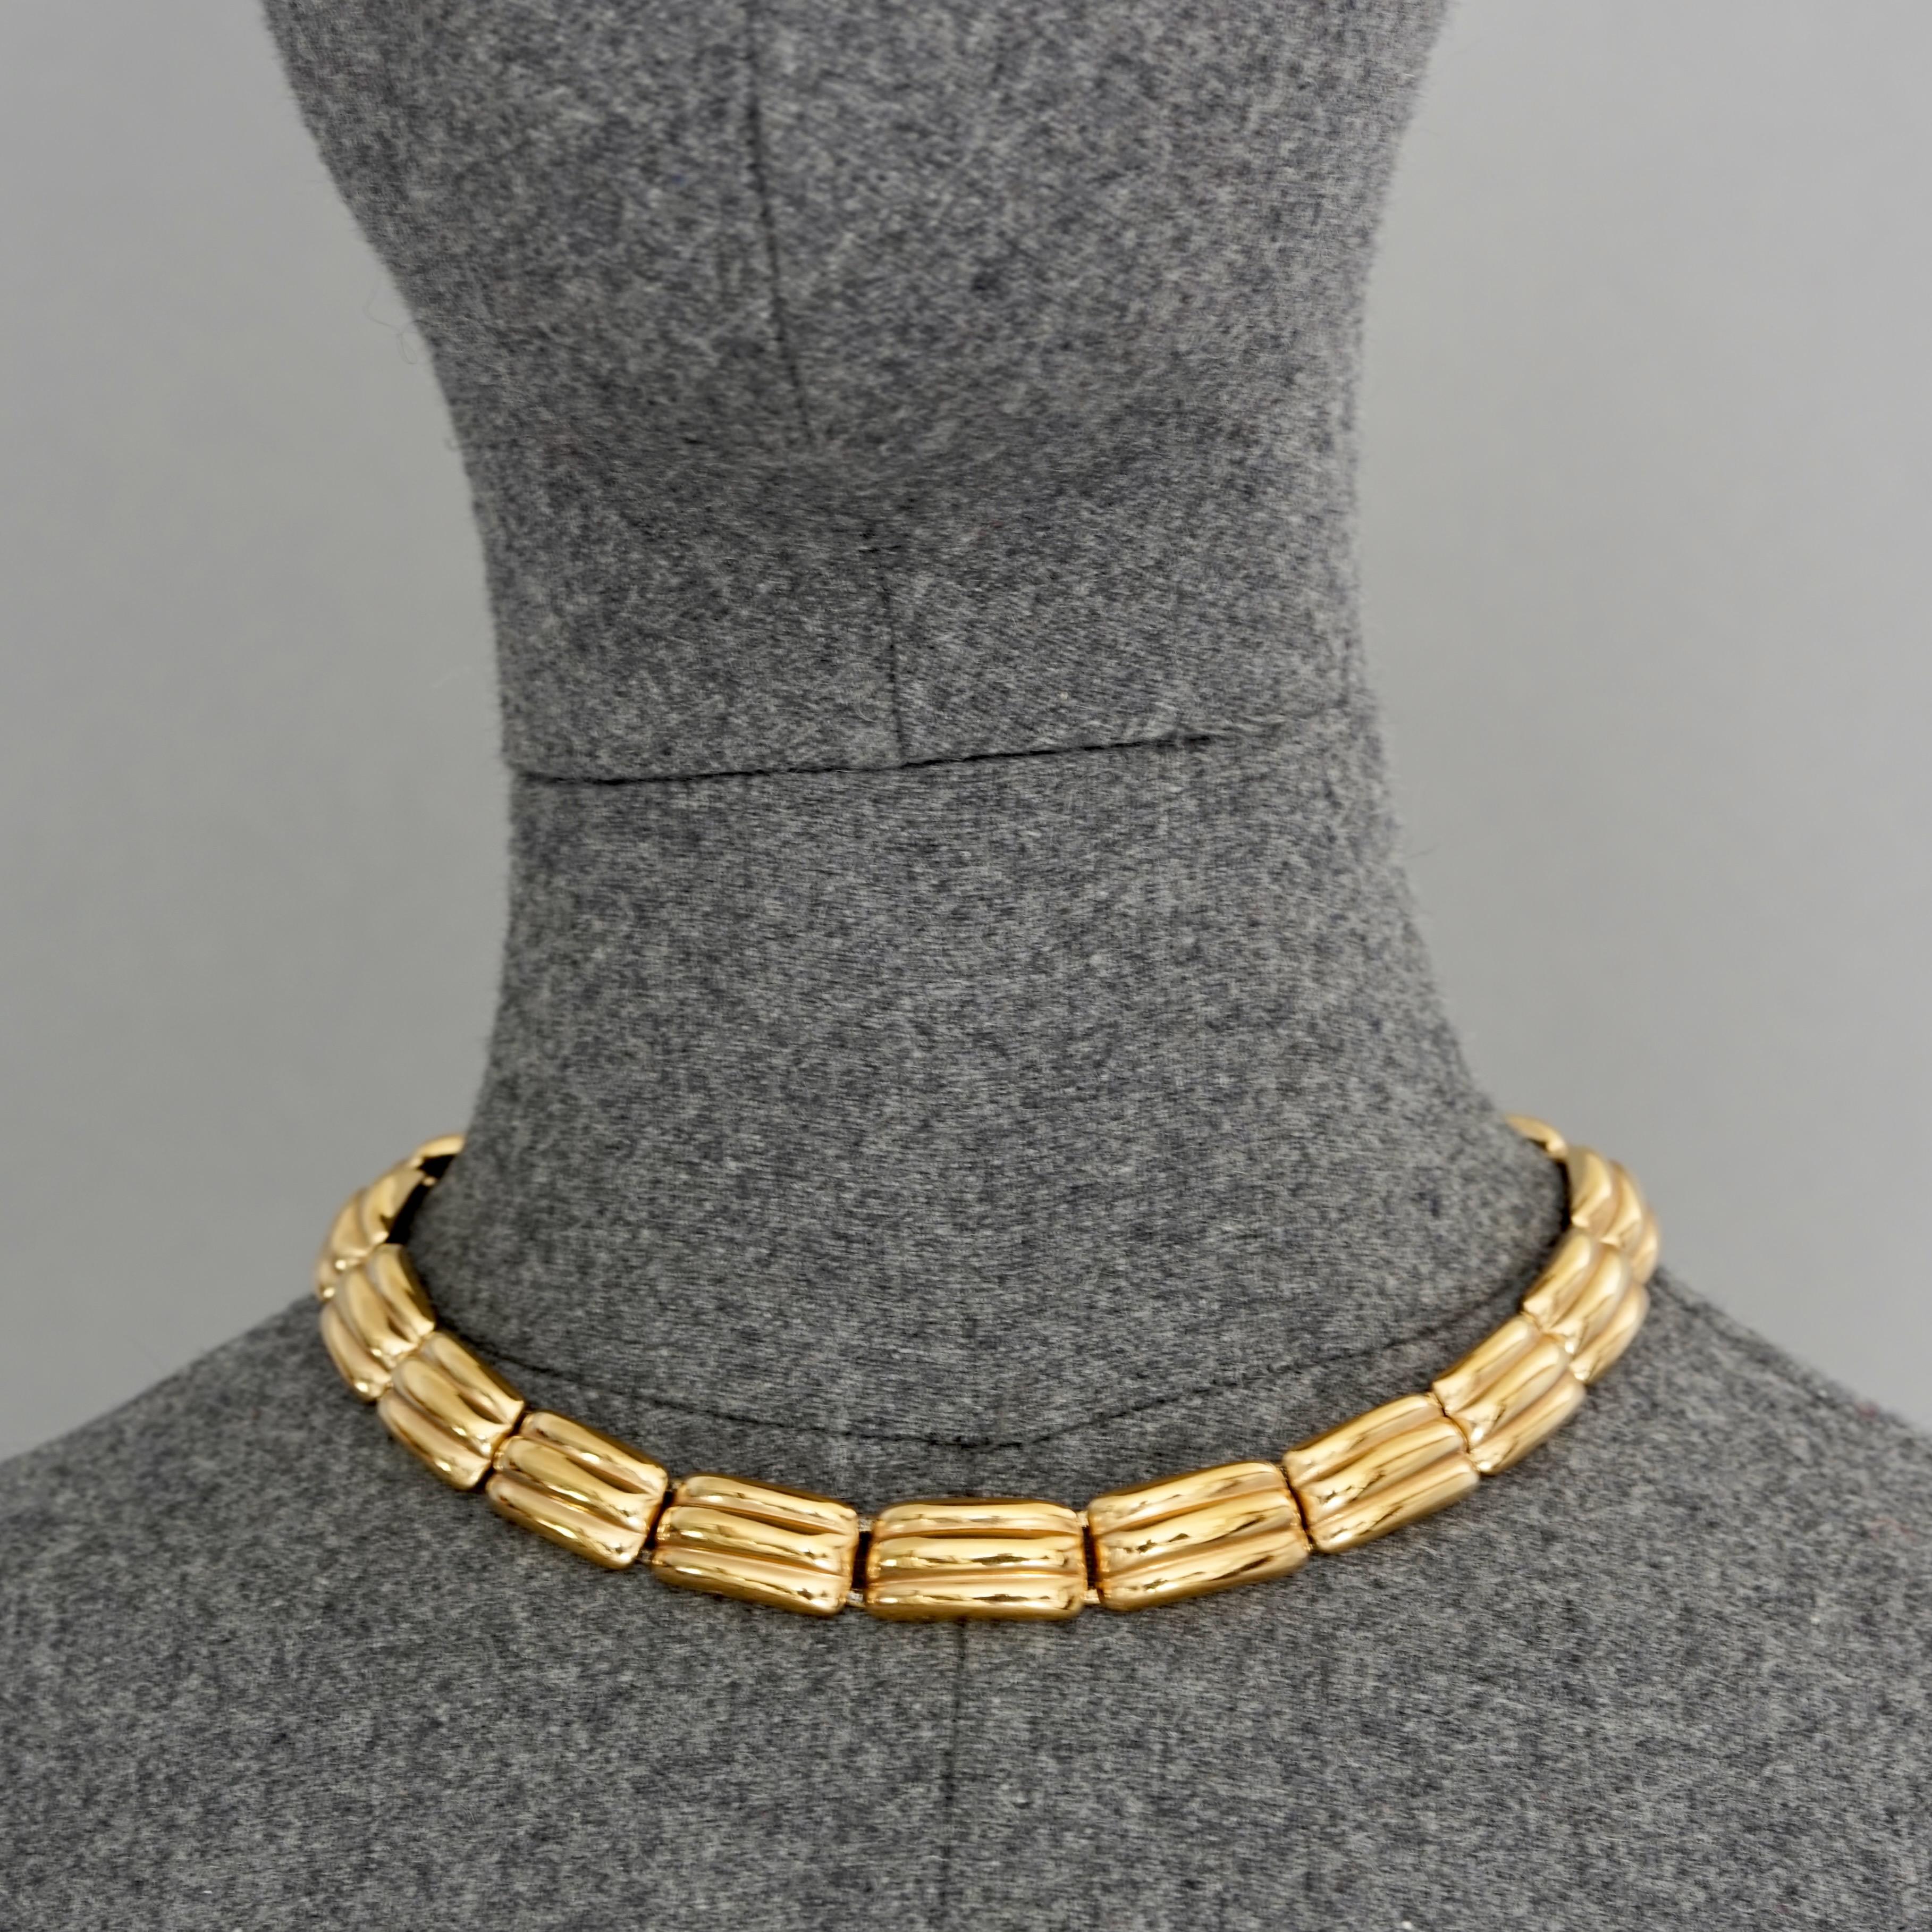 Vintage YVES SAINT LAURENT Ysl Gilt Link Choker Necklace

Measurements:
Height: 0.51 inch (1.3 cm)
Wearable Length: 15.35 inches (39 cm)

Features:
- 100% Authentic YVES SAINT LAURENT.
- Gilt link choker necklace.
- Gold tone hardware.
- Box clasp